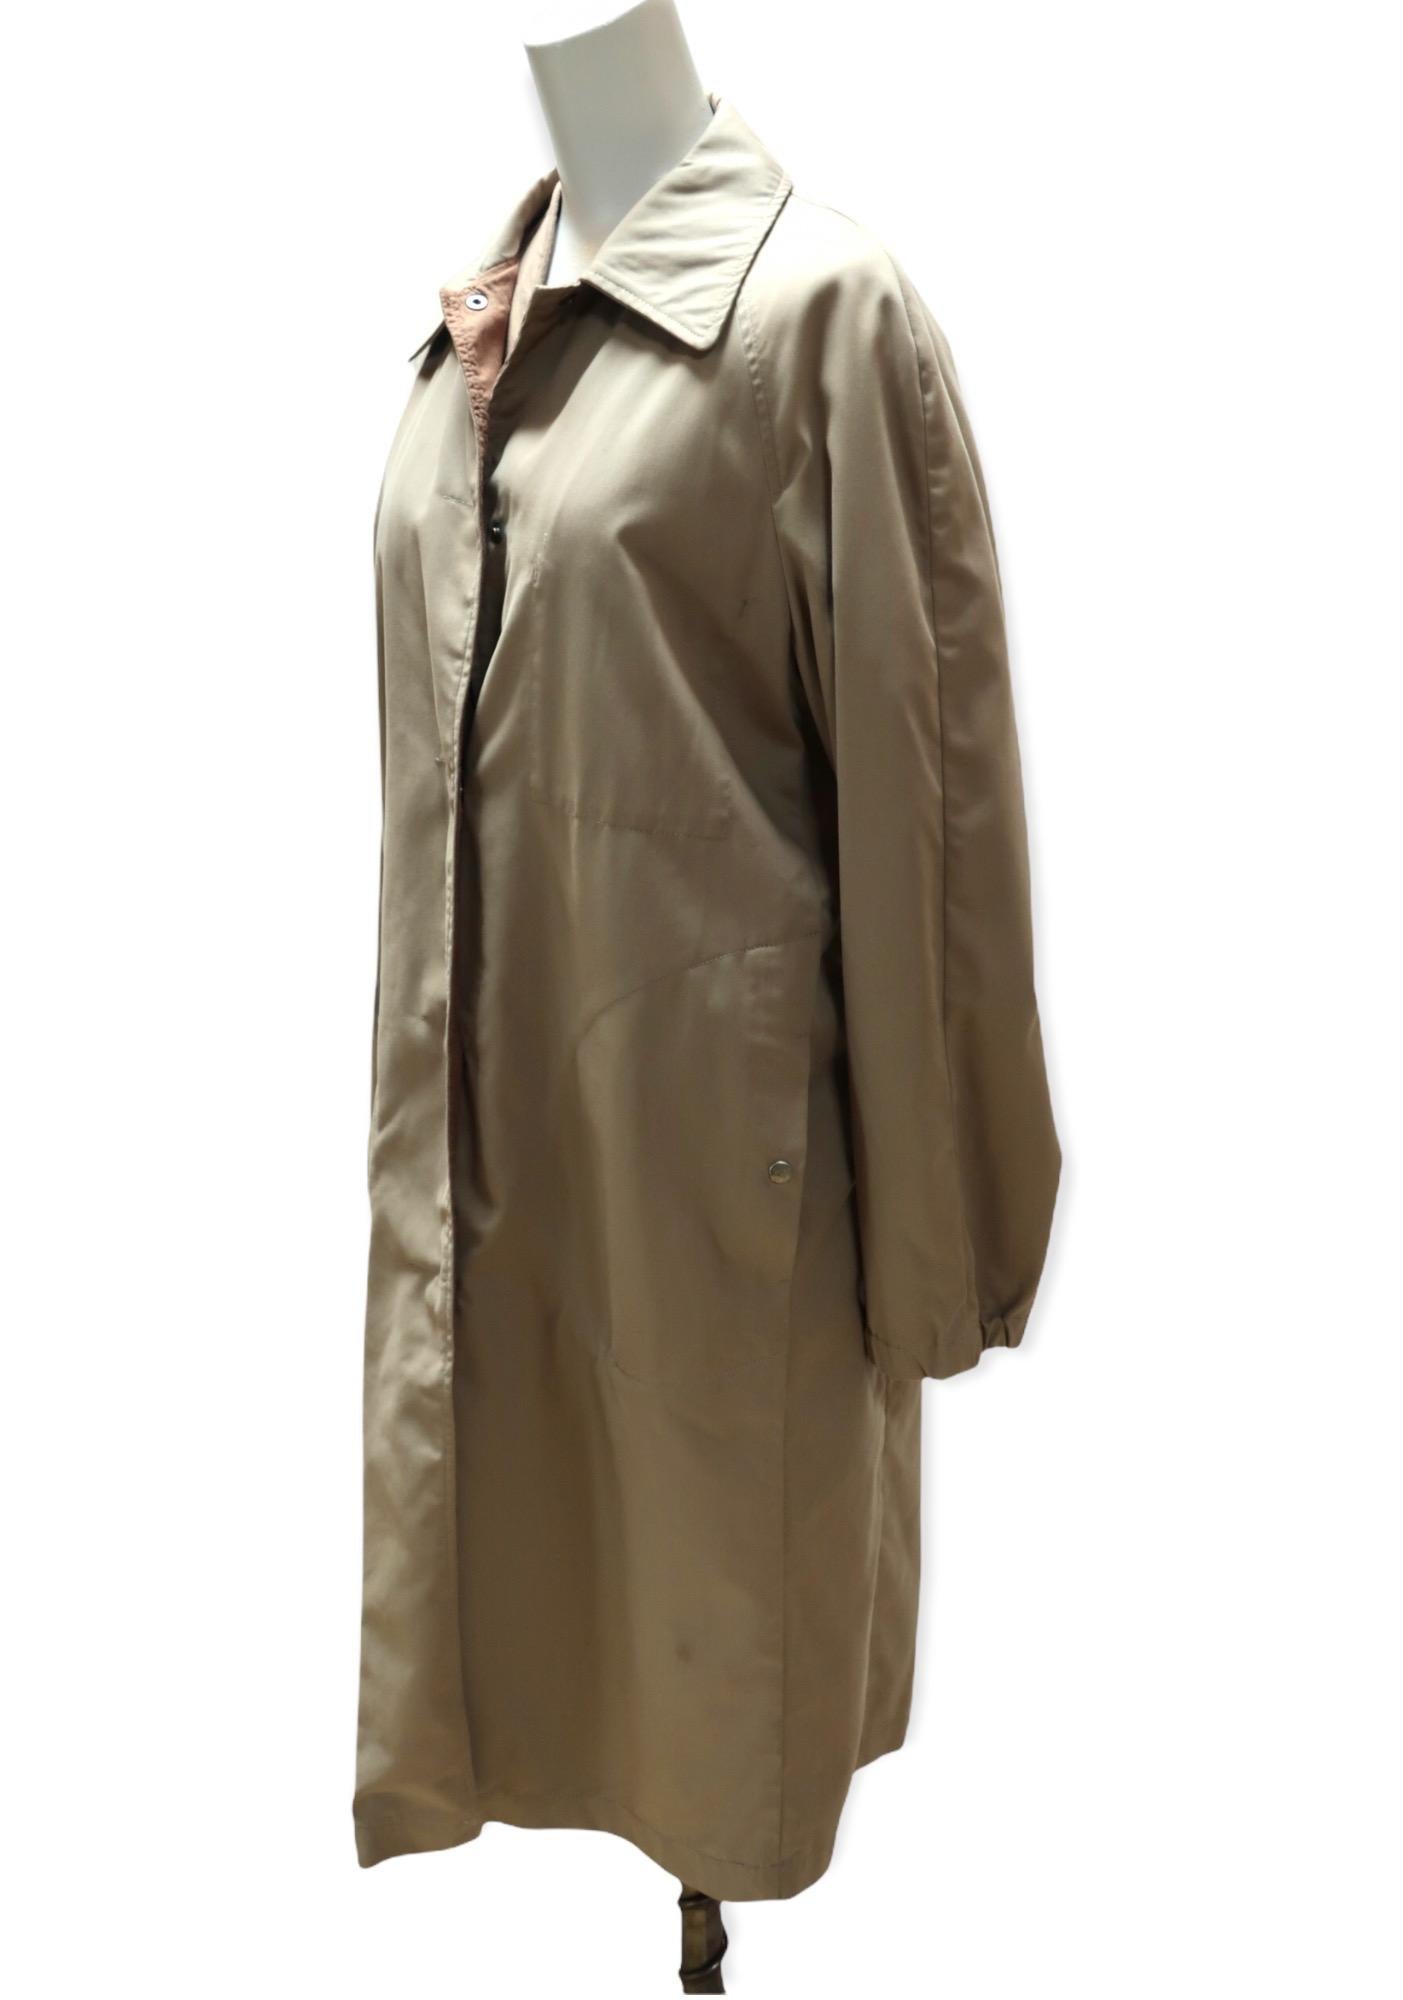 Maison Martin Margiela Double Layer Coat In New Condition For Sale In Laguna Beach, CA